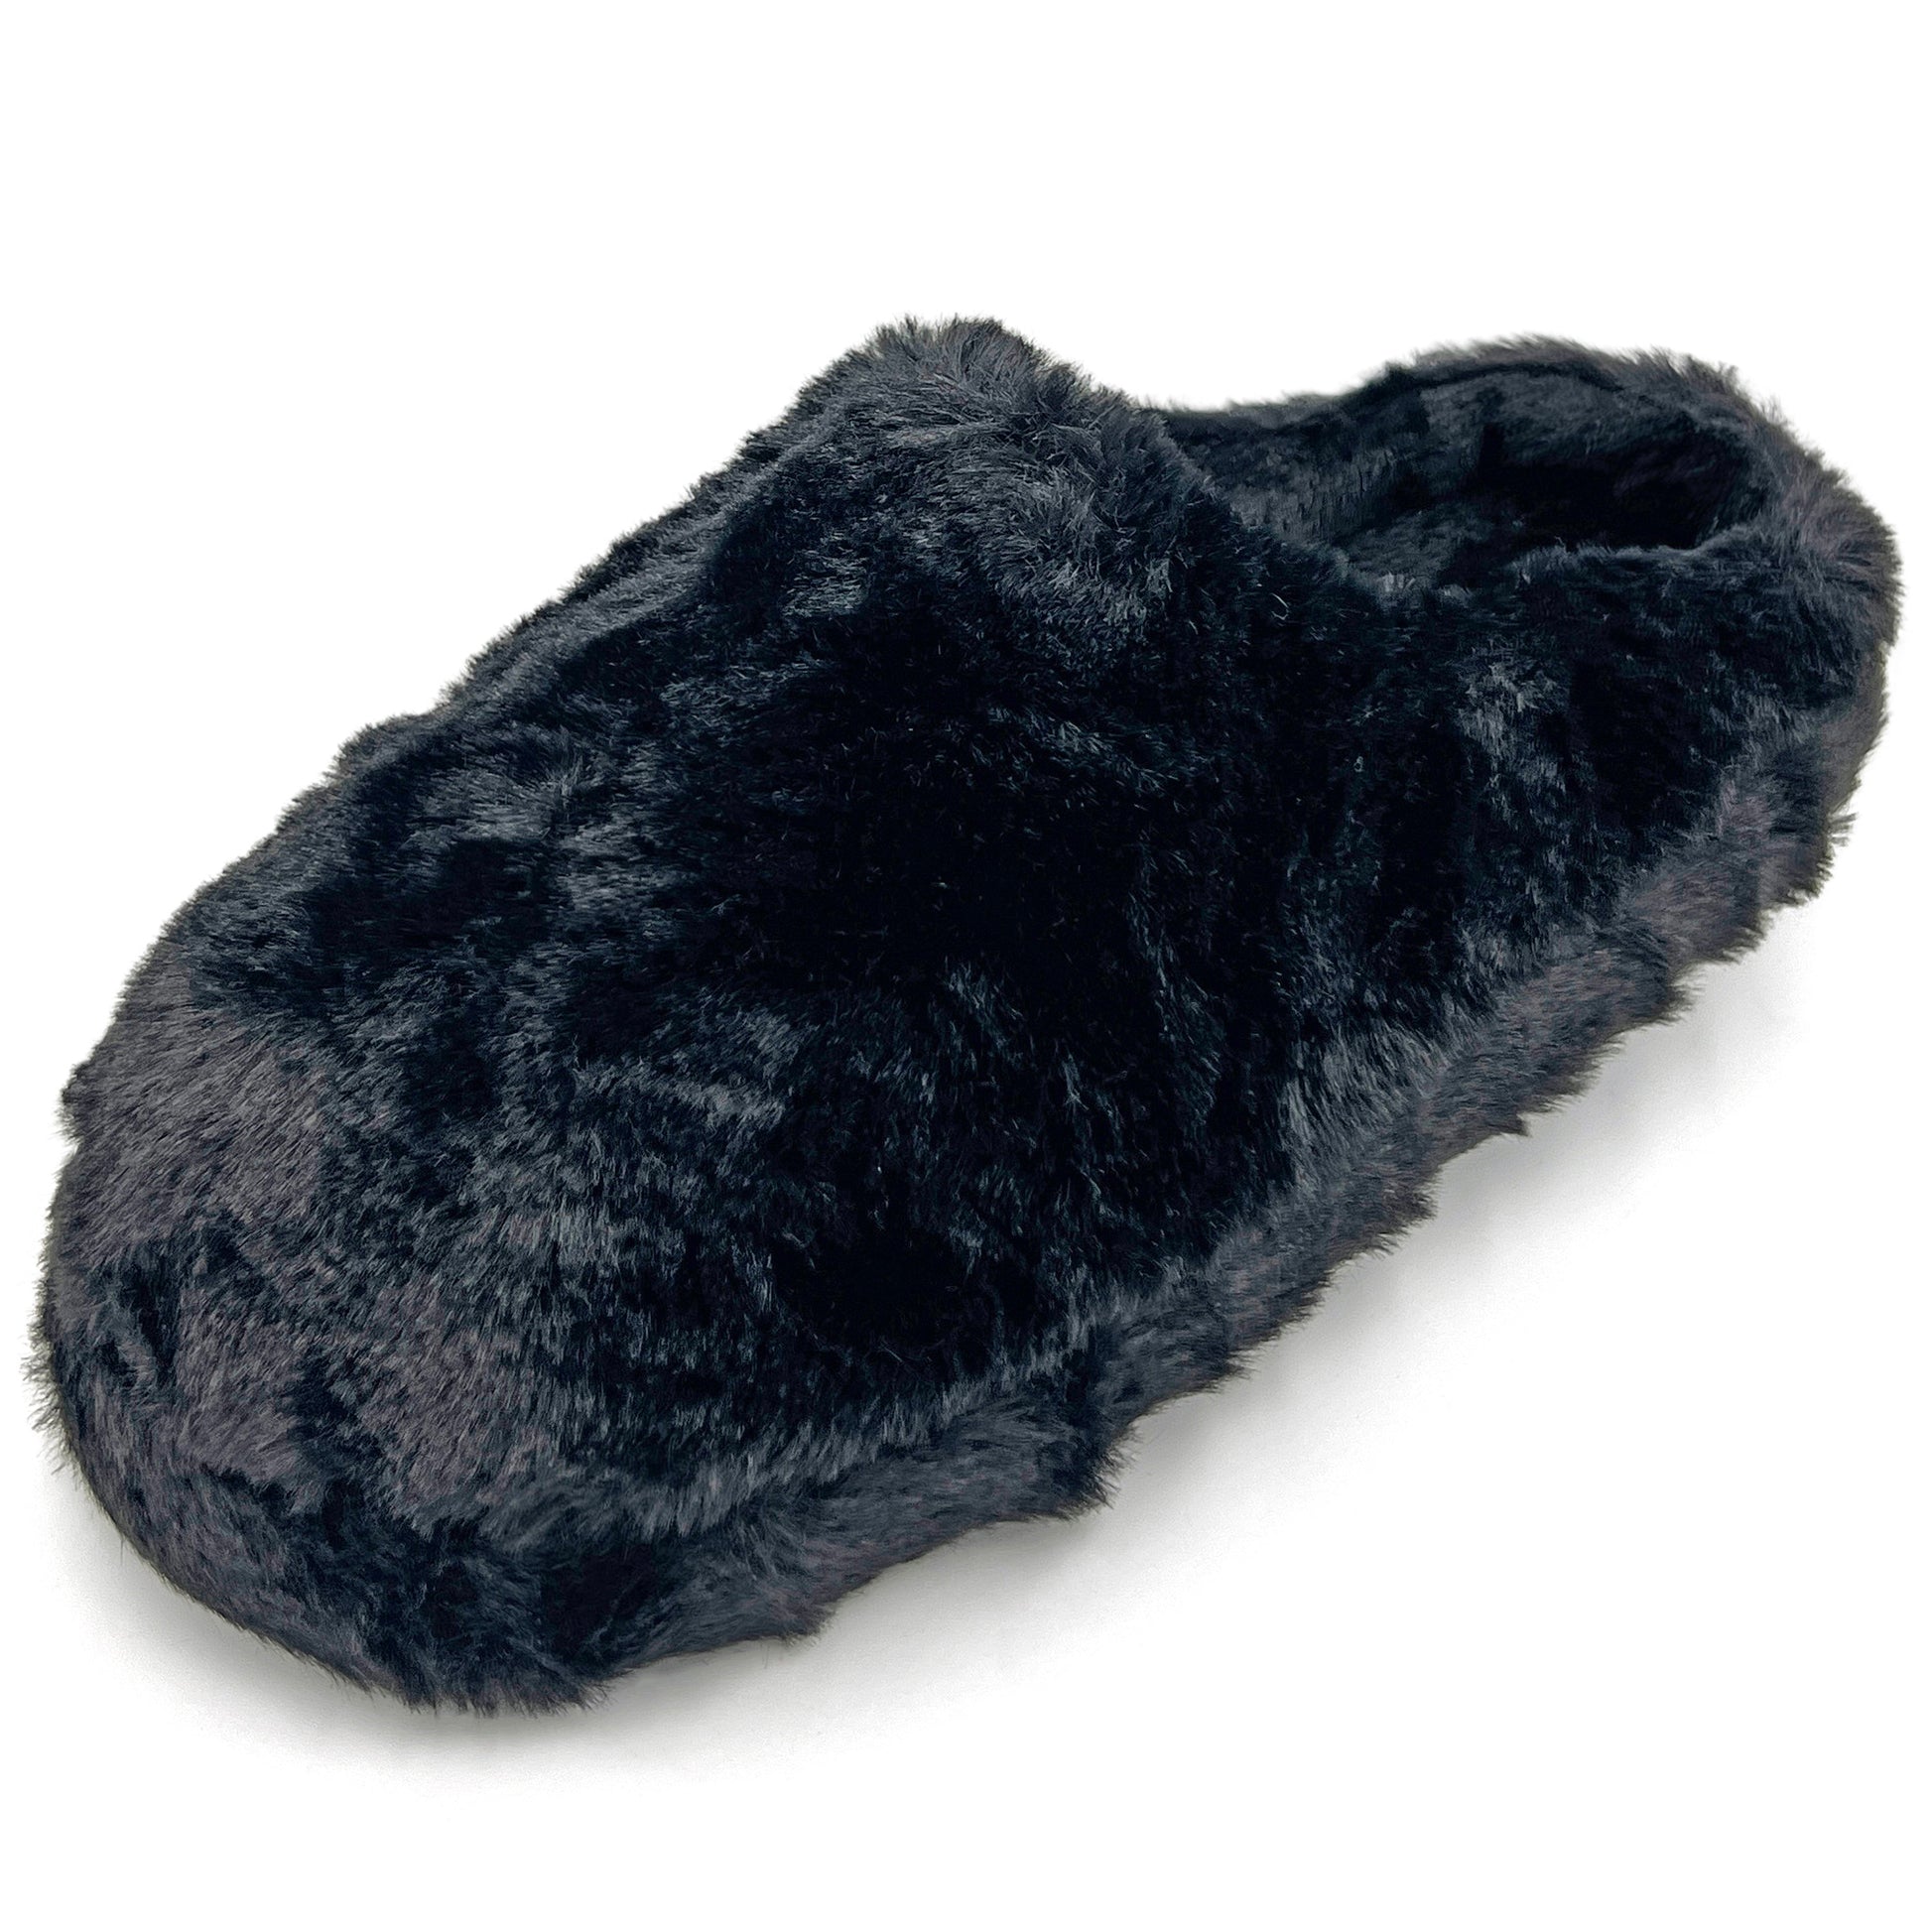 Fuzzy Slippers - Black